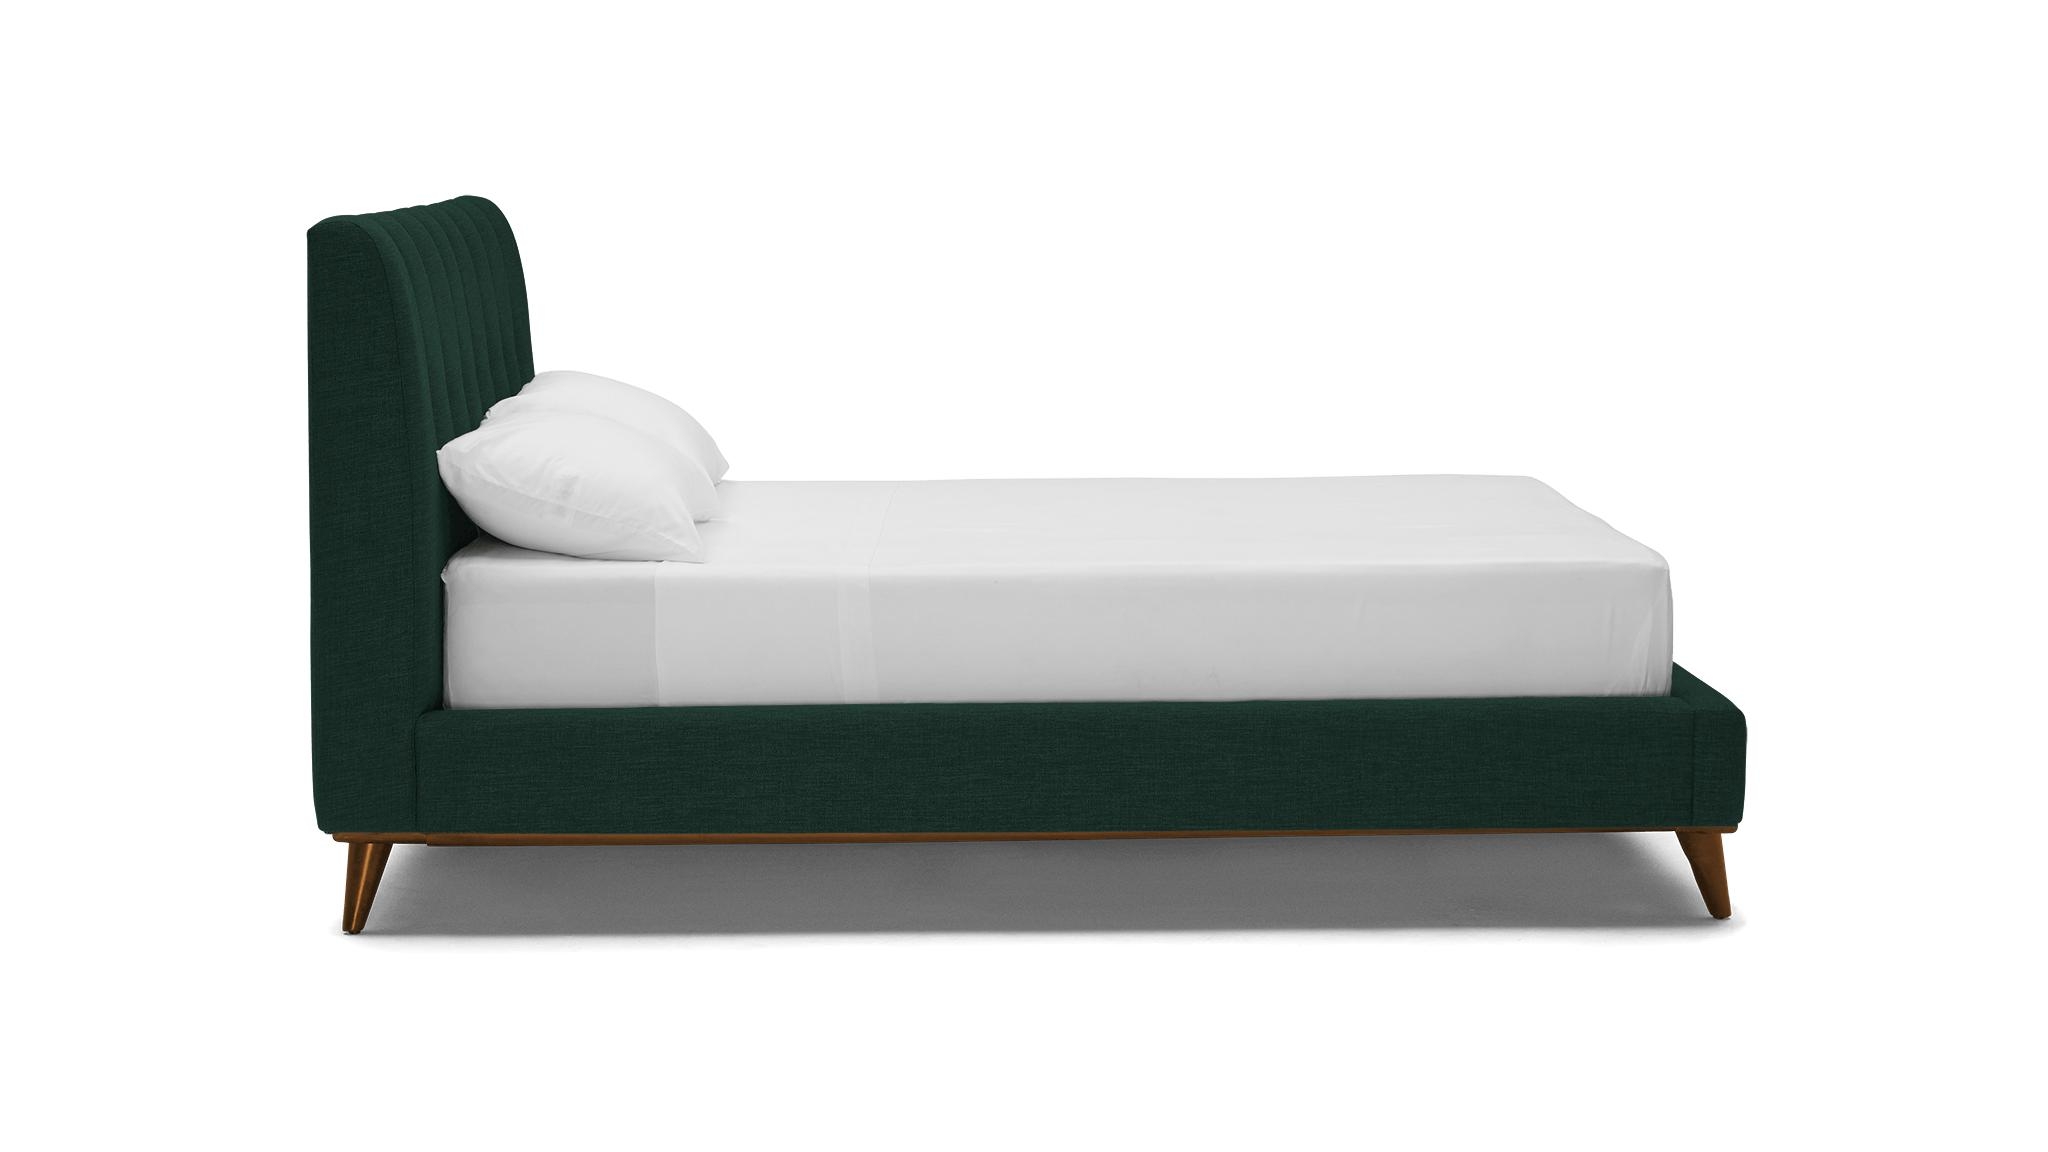 Green Hughes Mid Century Modern Bed - Royale Evergreen - Mocha - Eastern King - Image 2